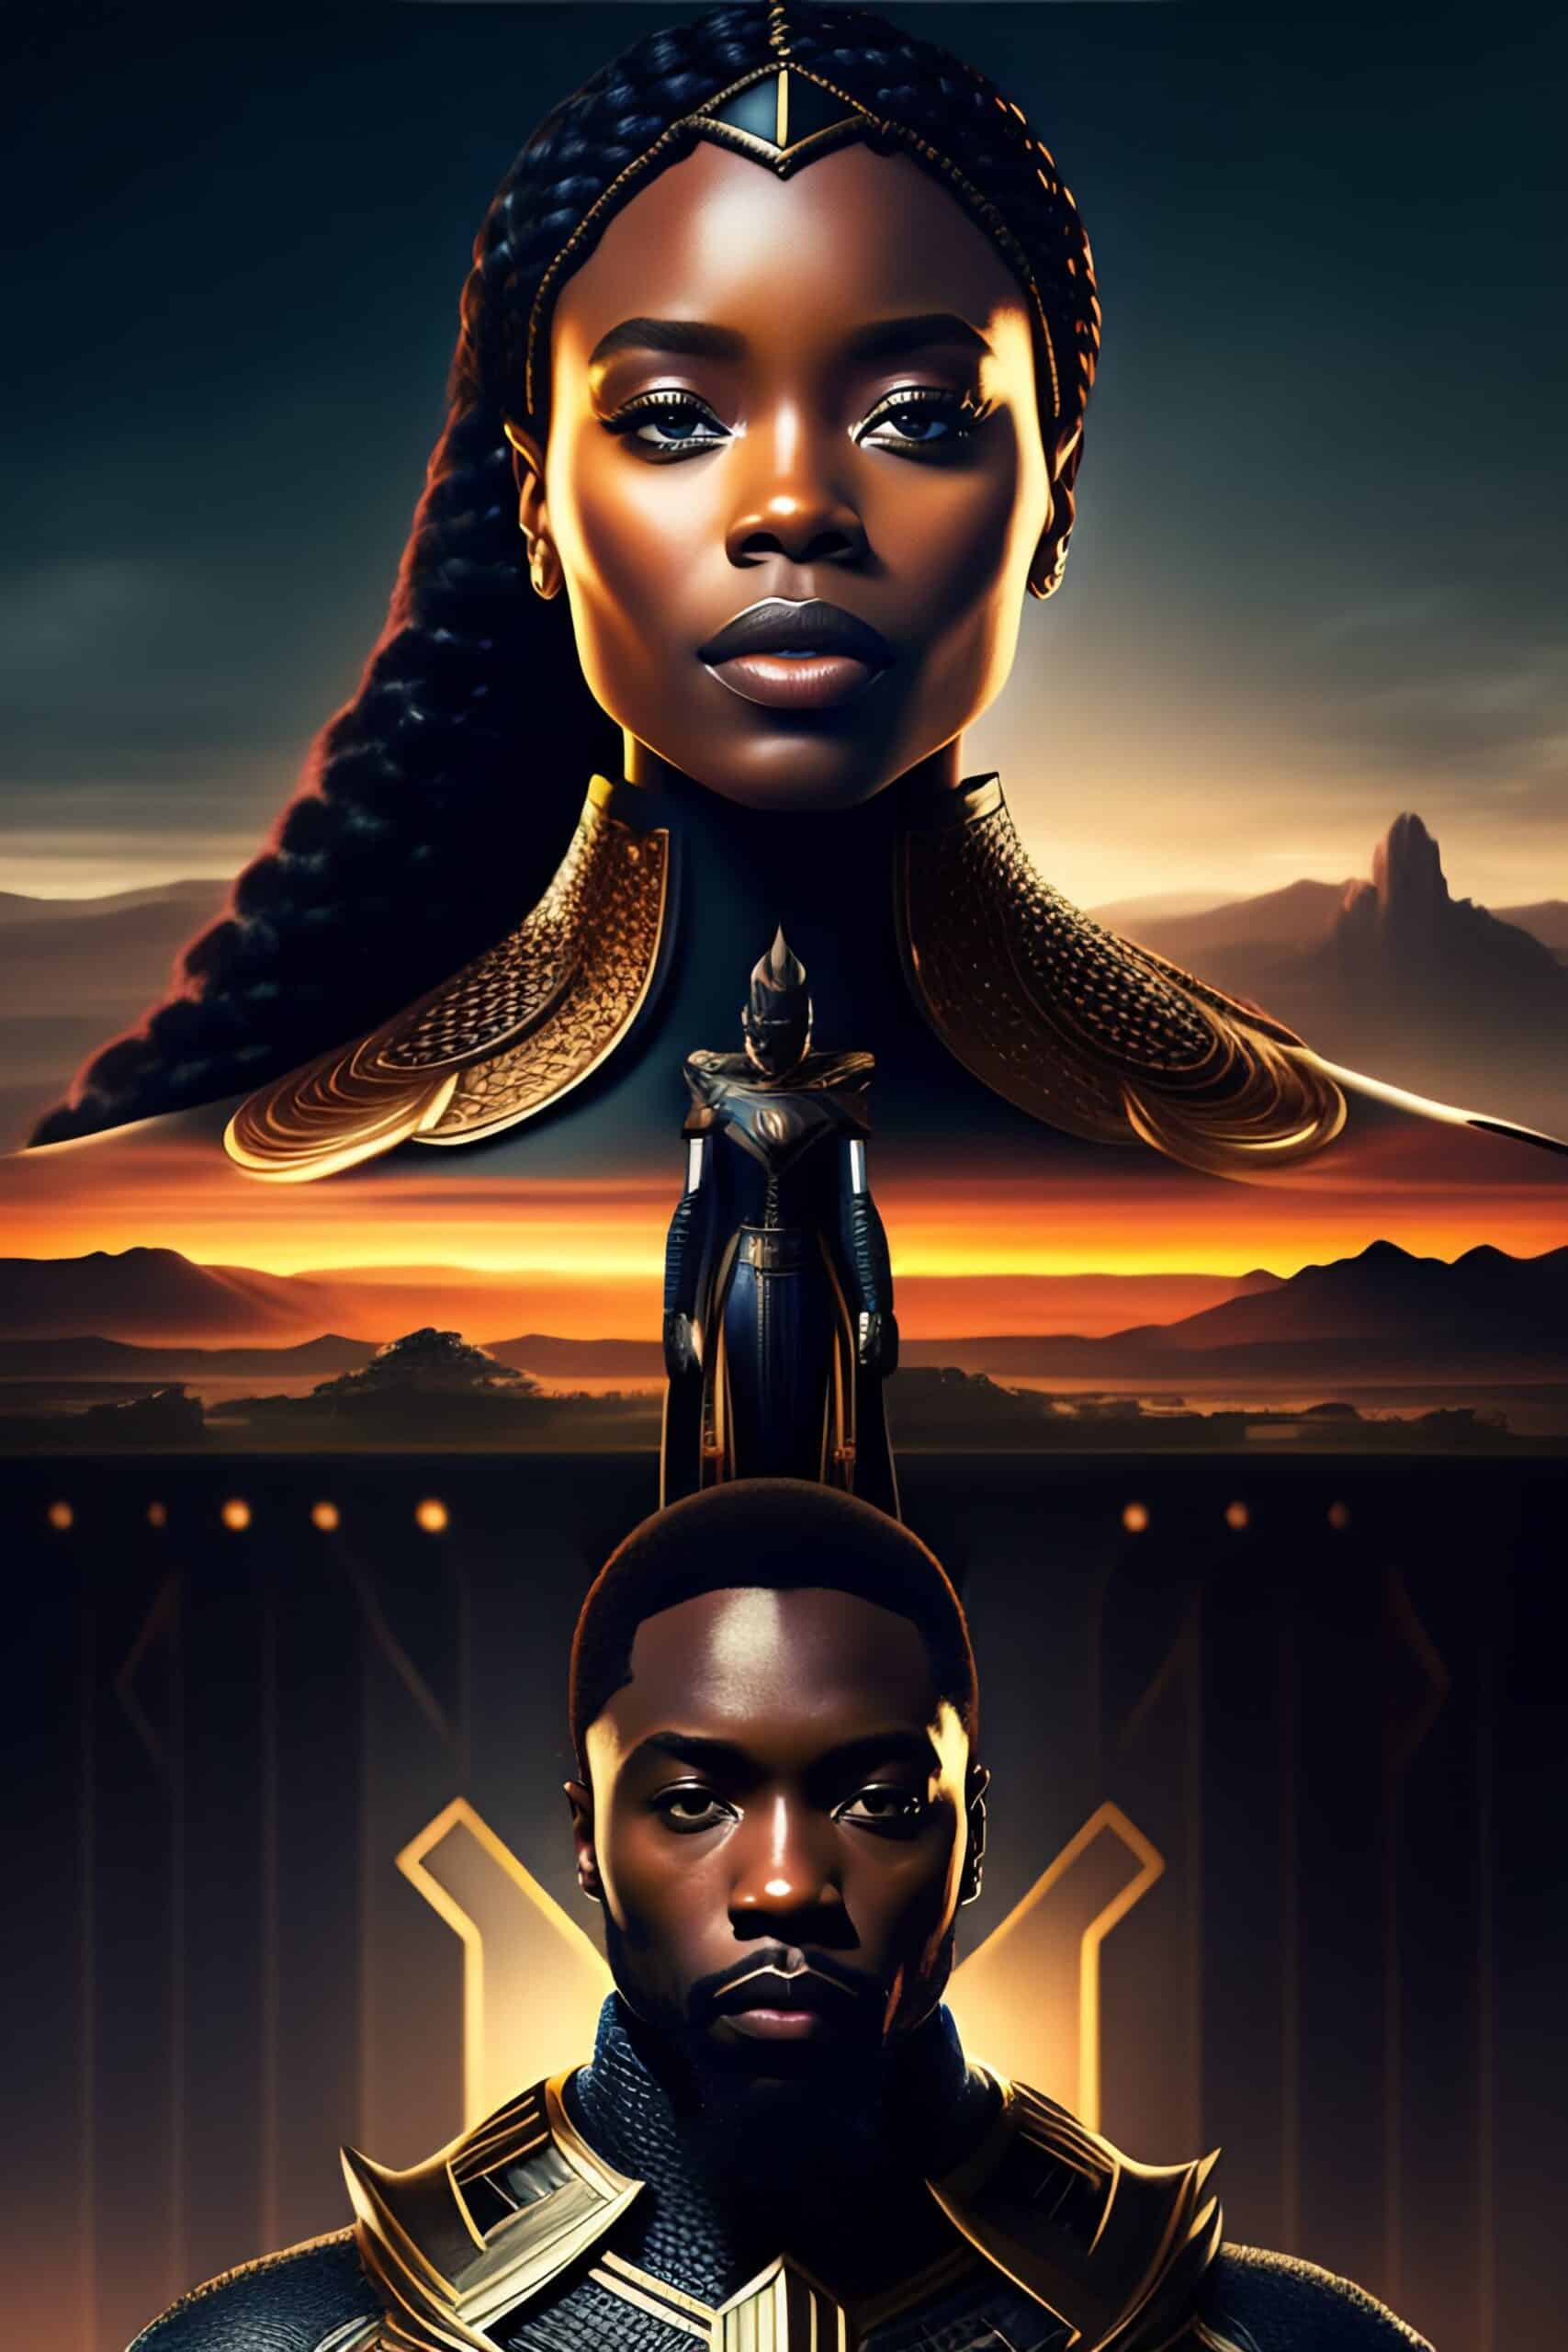 Kreyolicious in Memoriam|Is Wakanda in Marvel's Black Panther Film A Metaphor For Haiti?